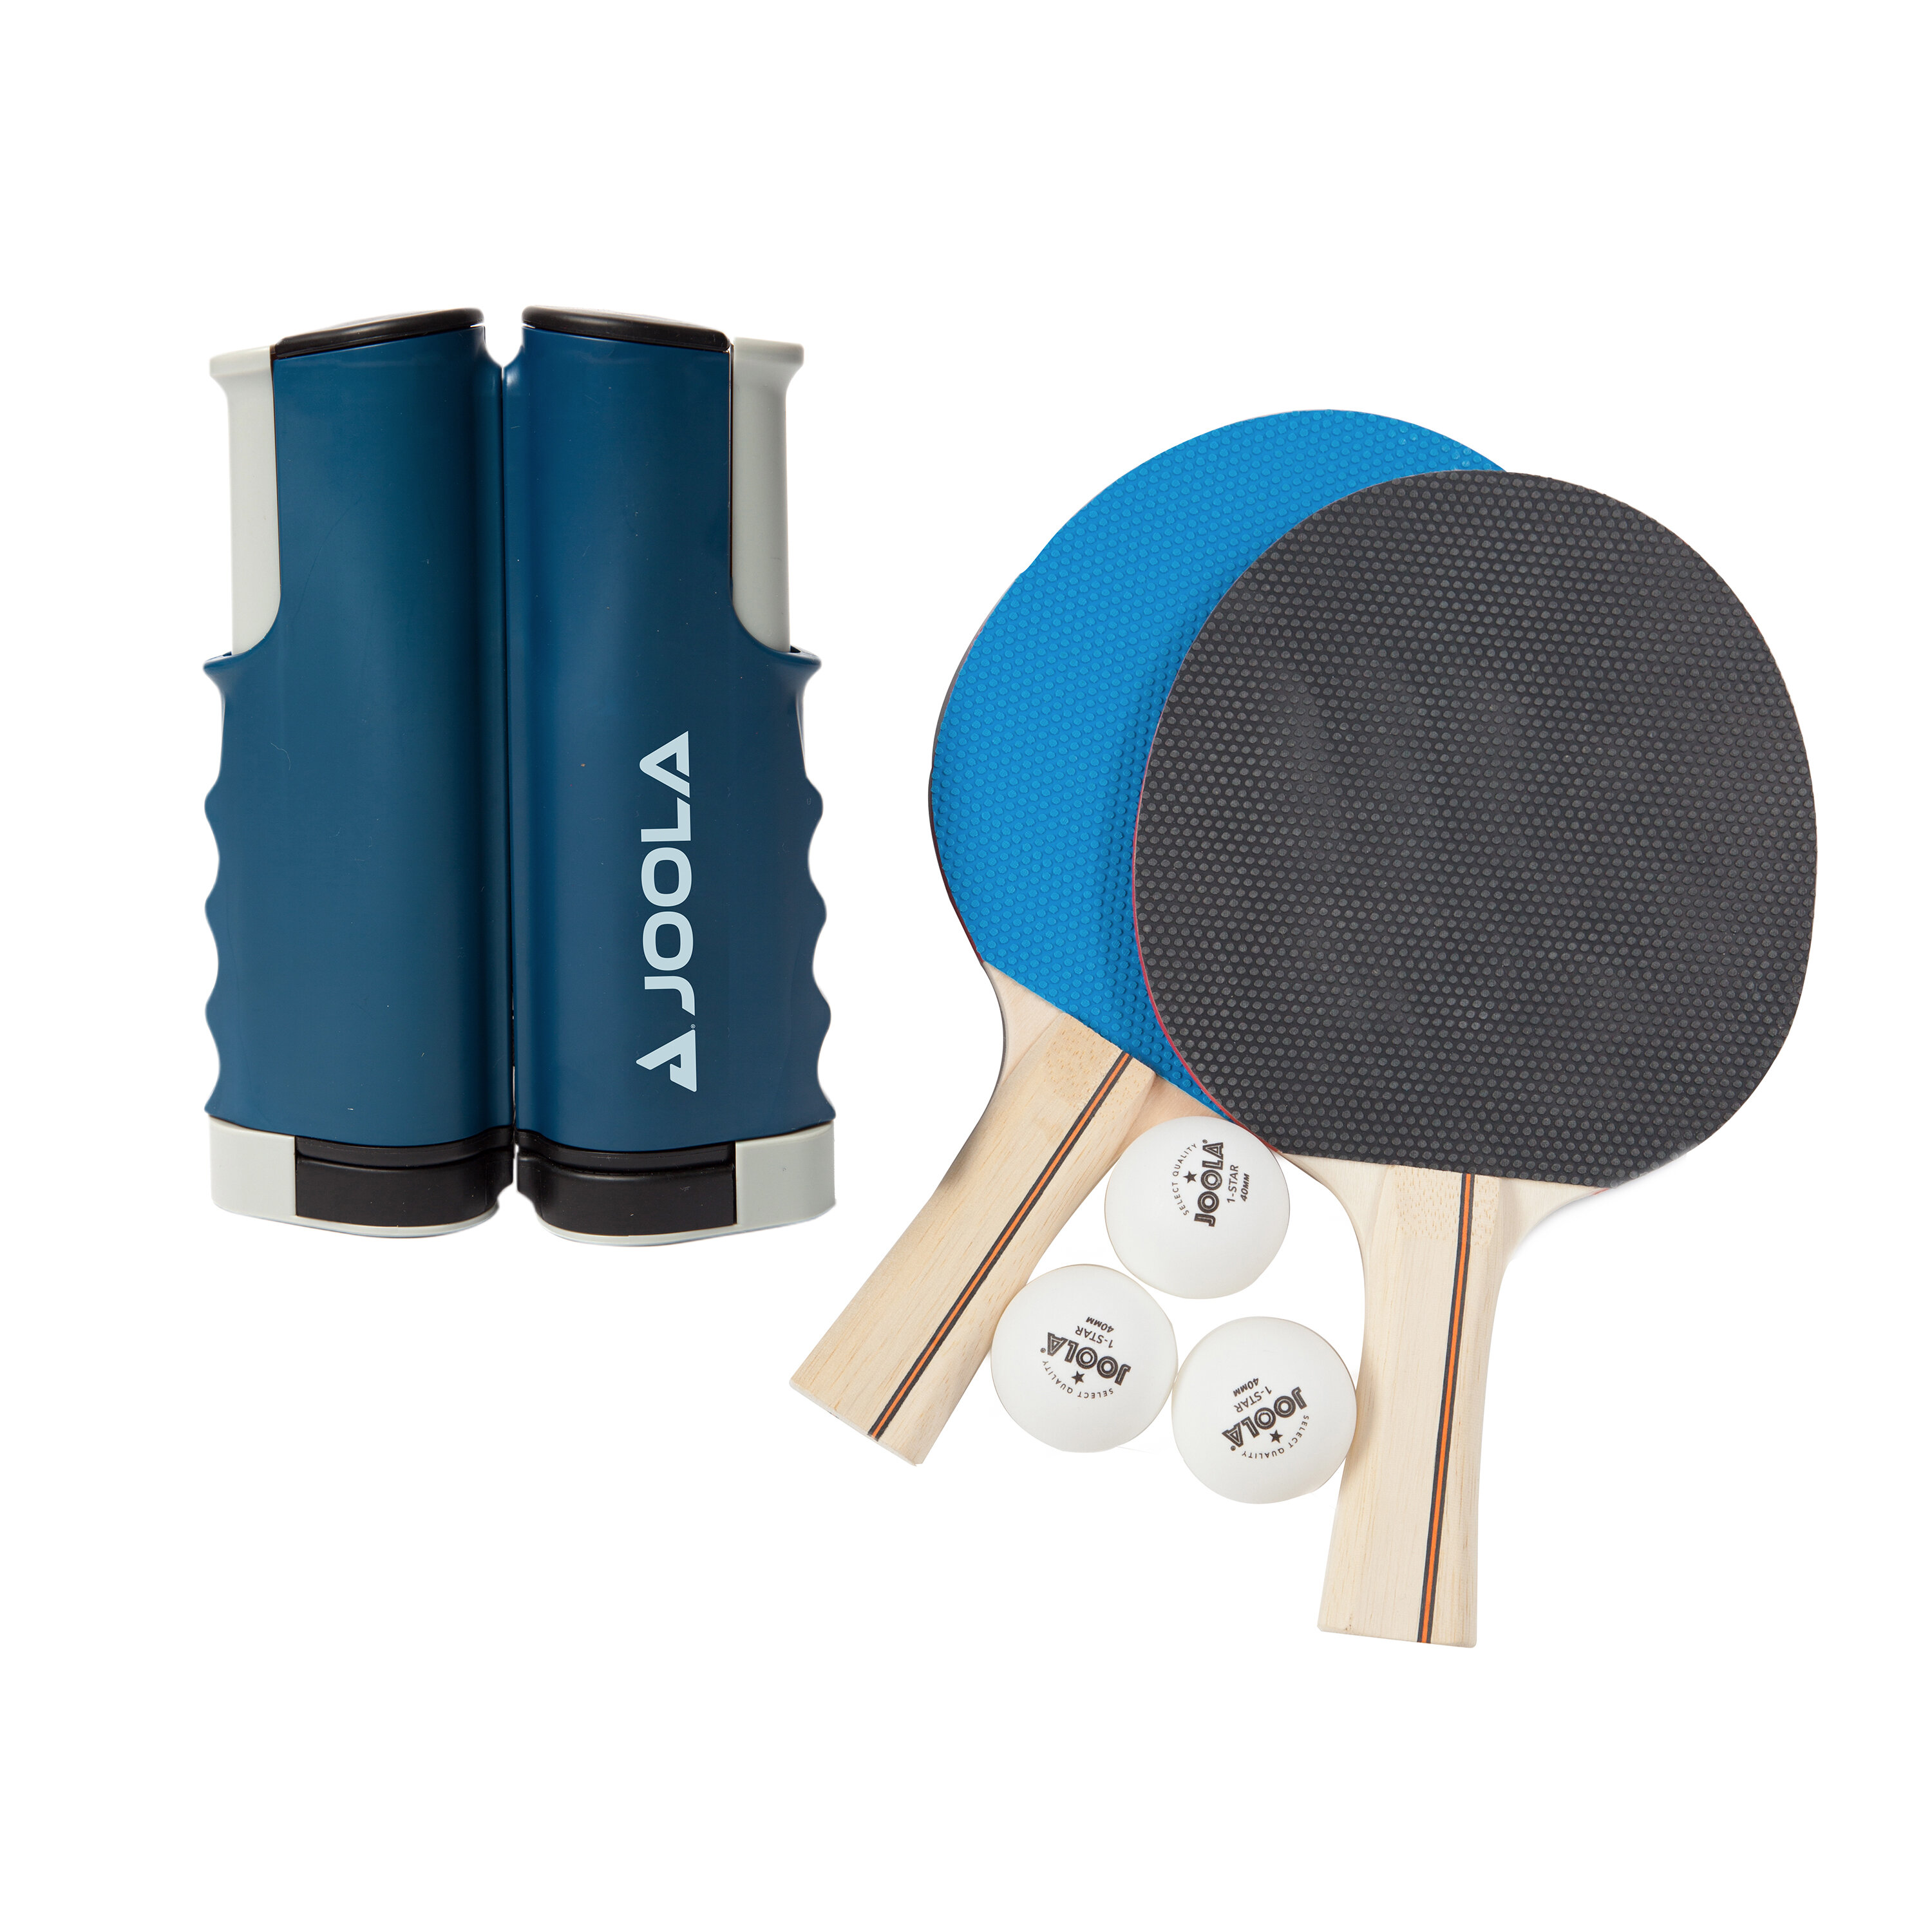 JOOLA Essentials Table Tennis Net and Racket Set & Reviews | Wayfair